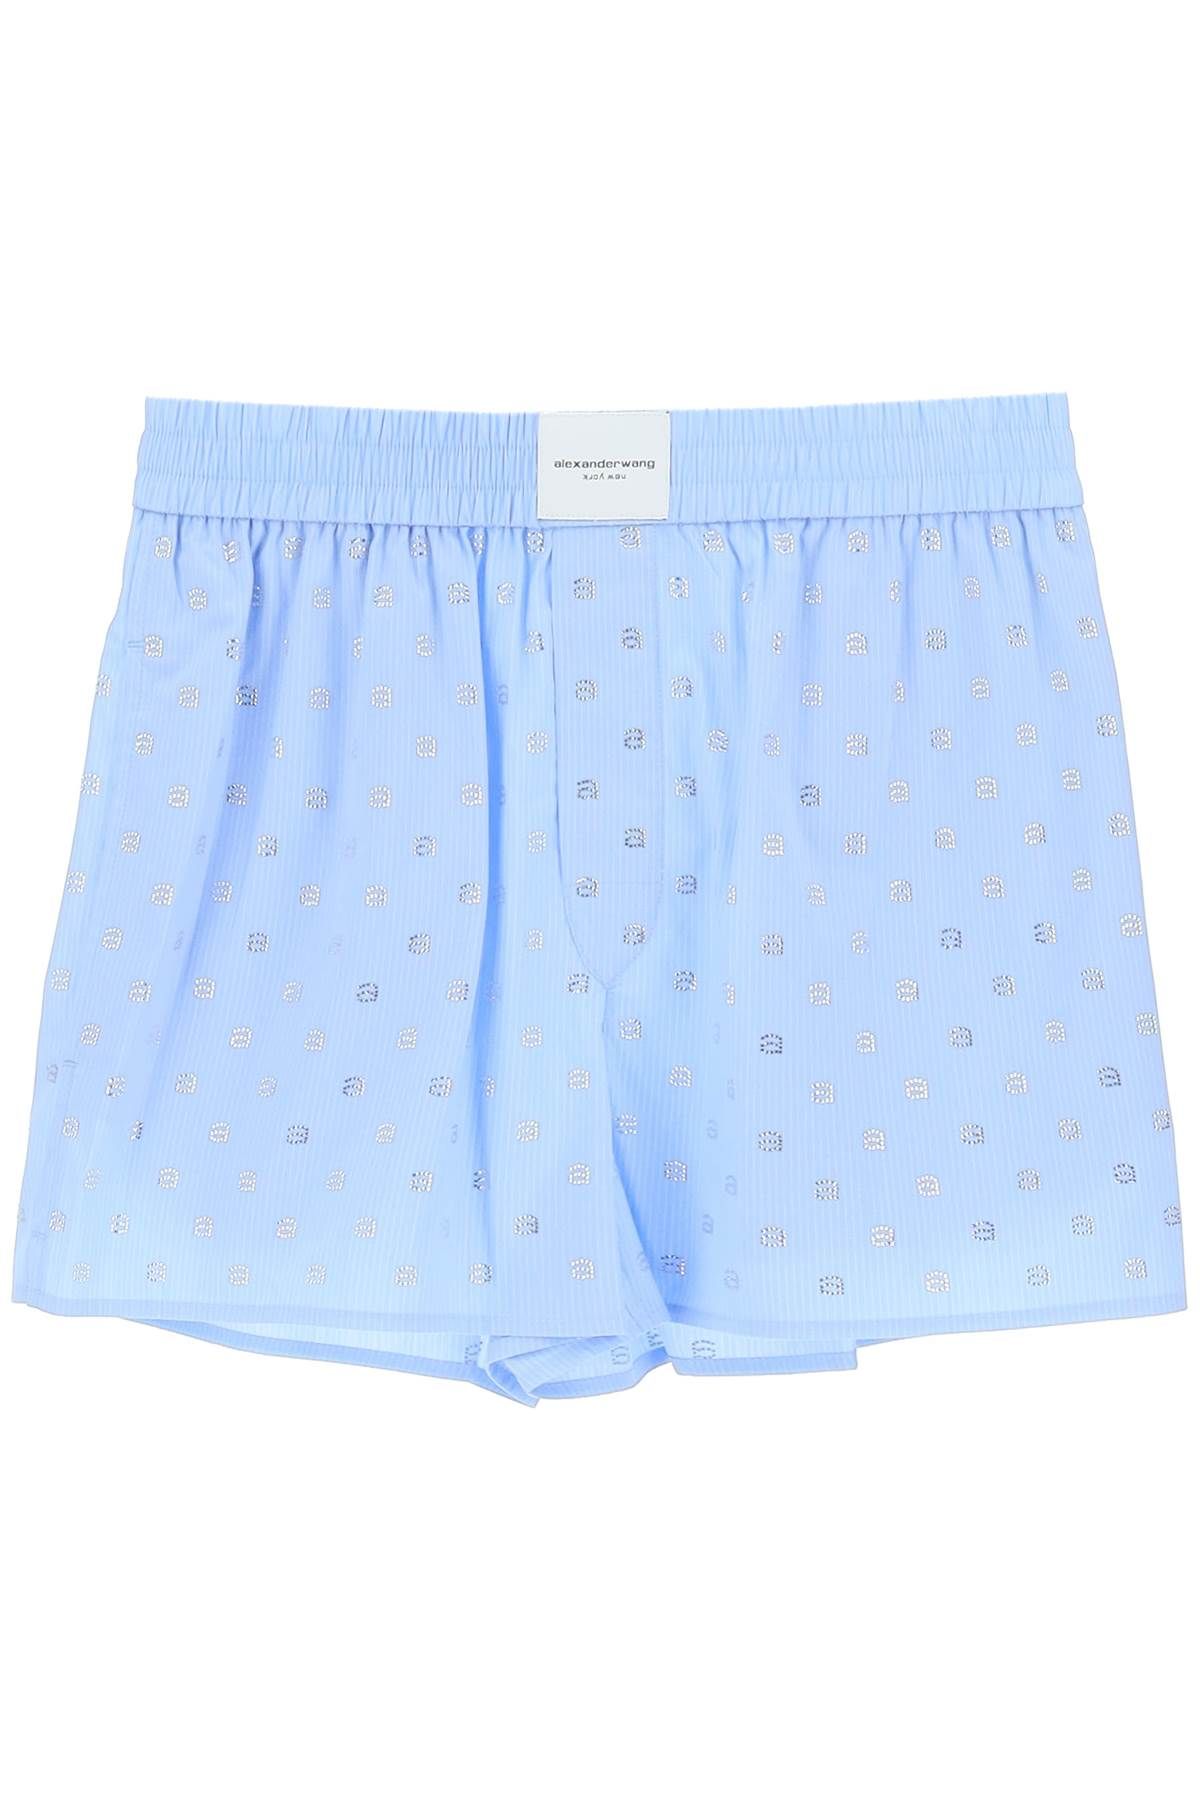 Shop Alexander Wang Boxer Shorts With Rhineston Monogram In Light Blue